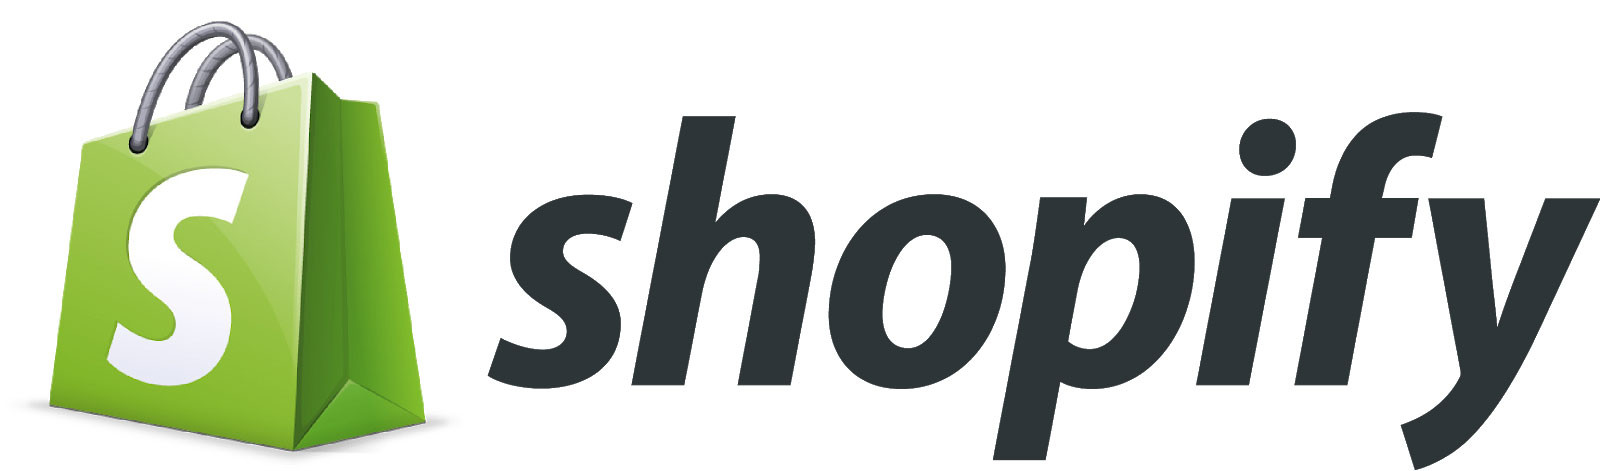 Shopify development is cheaper than magento development services